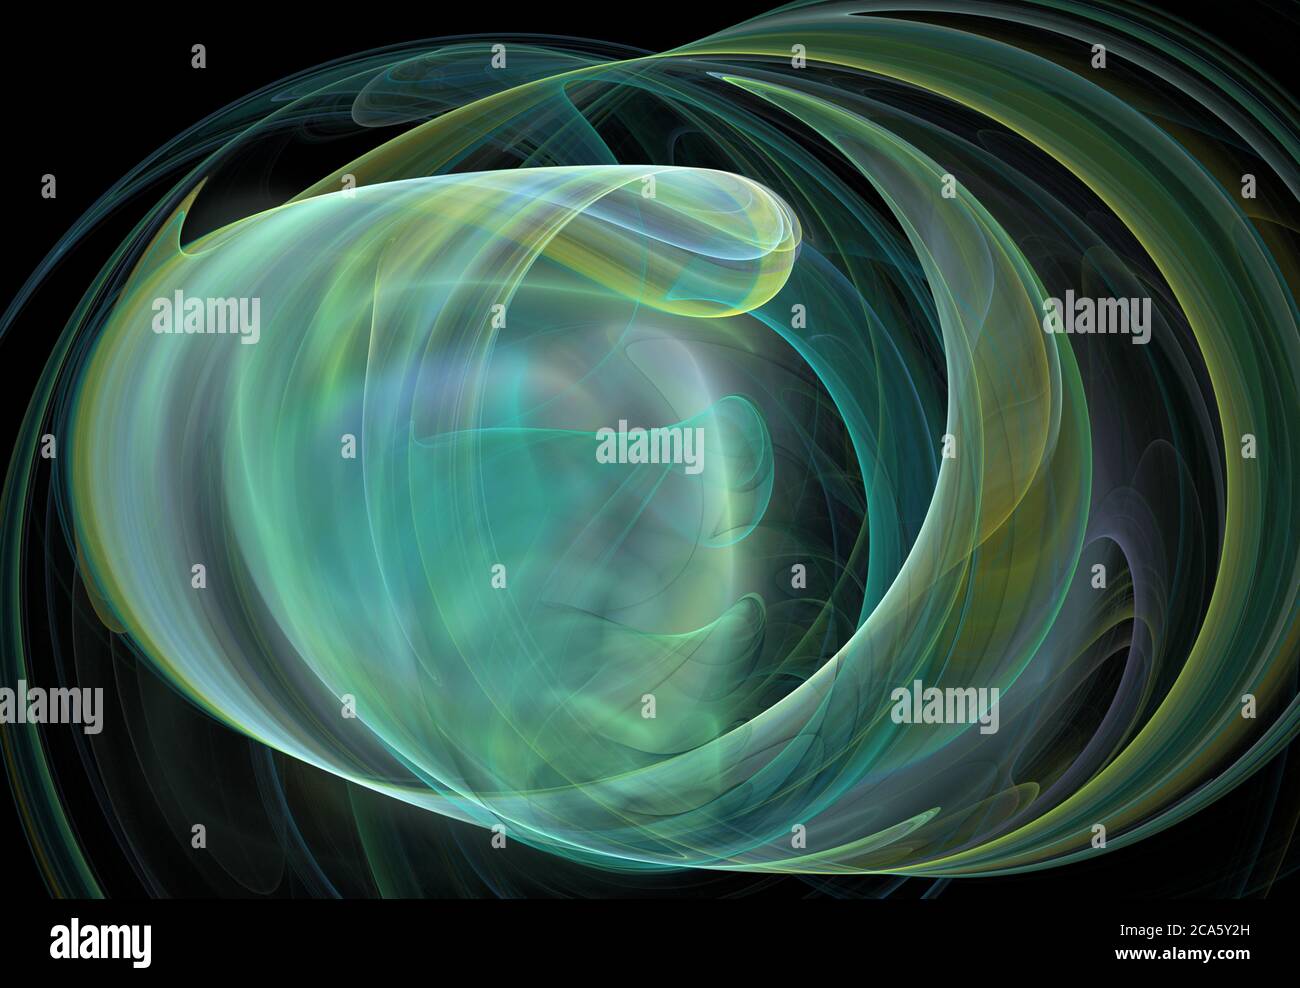 Spirales abstraites bleu-vert sur fond noir Banque D'Images